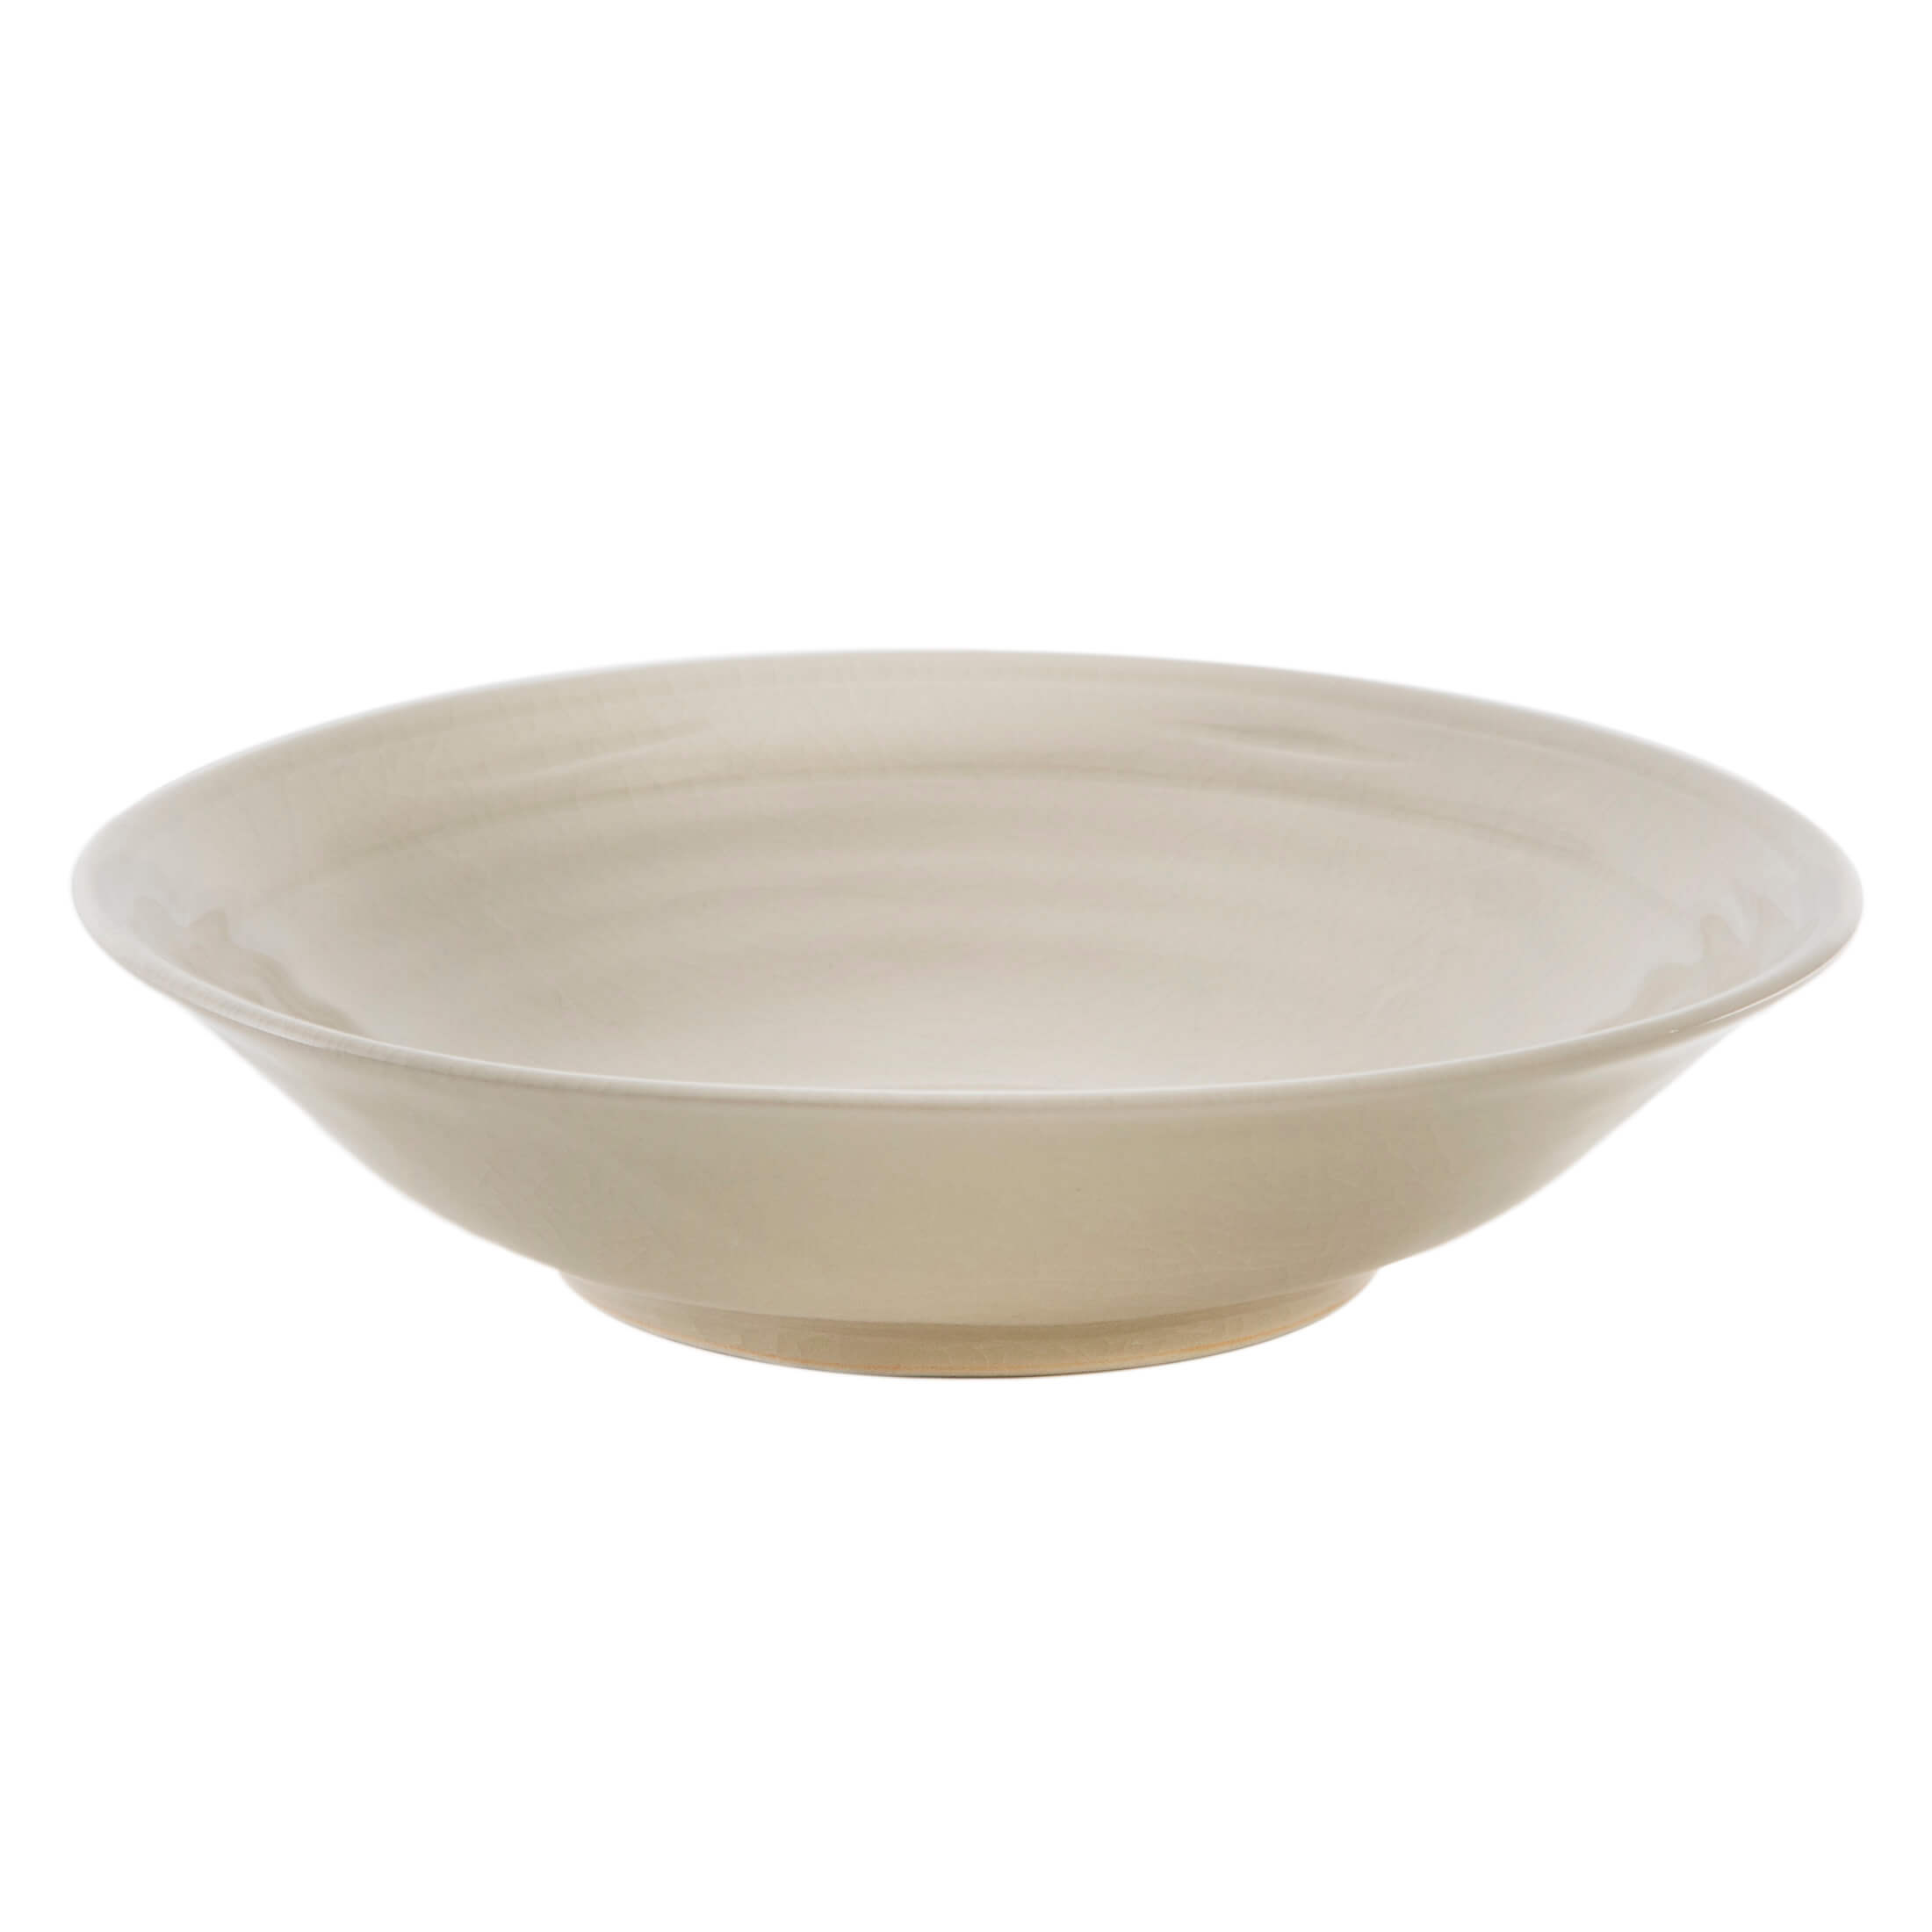 18 Lovely Simon Pearce Pottery Vase 2022 free download simon pearce pottery vase of belmont crackle ivory pasta bowl for 1824ivory belmont